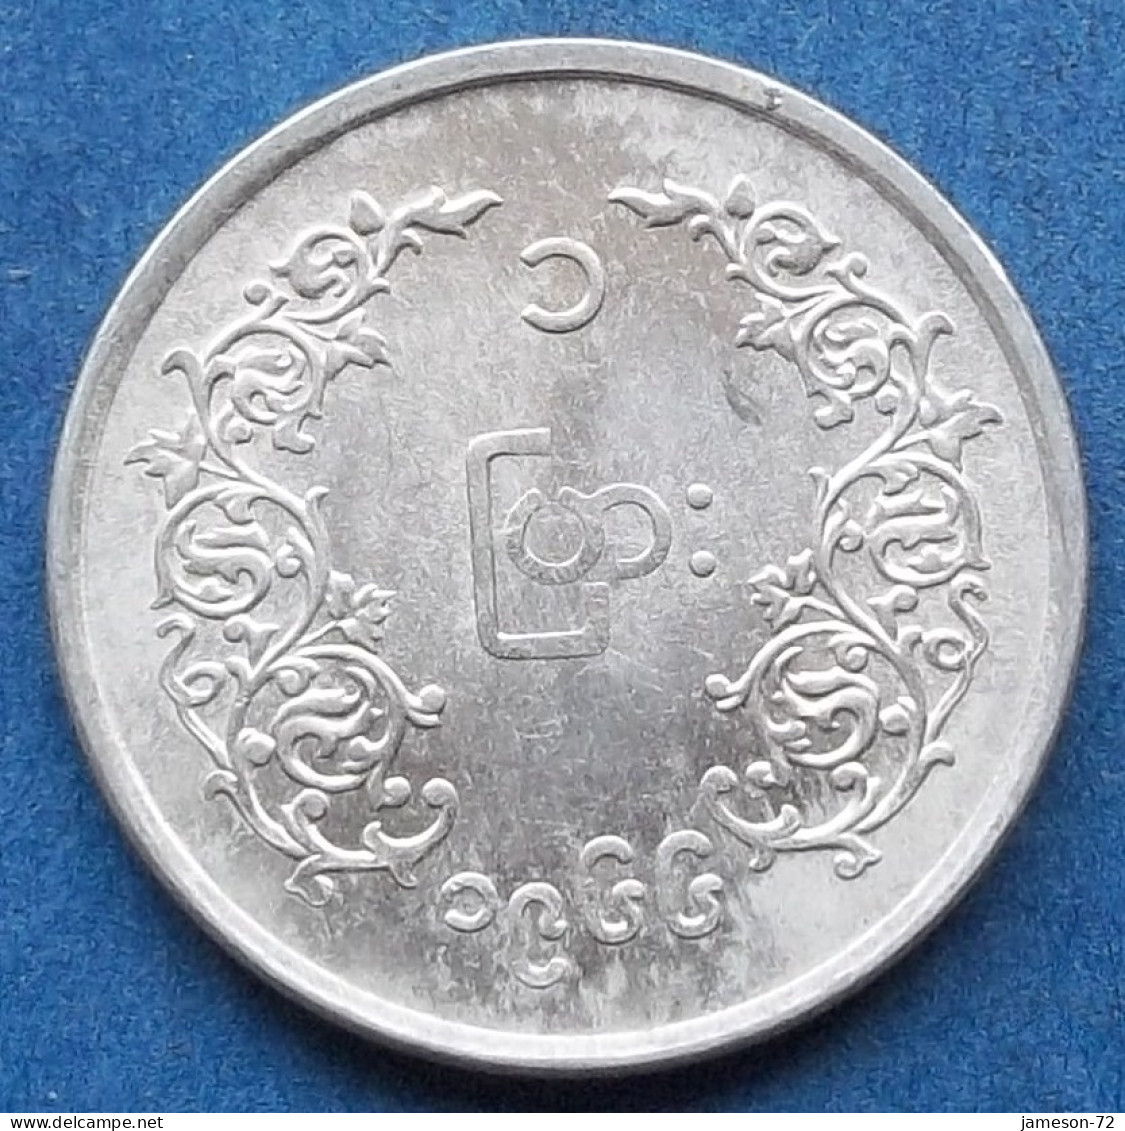 BURMA - 1 Pya 1966 KM# 38 Republic Decimal Coinage (1952-1989) - Edelweiss Coins - Myanmar